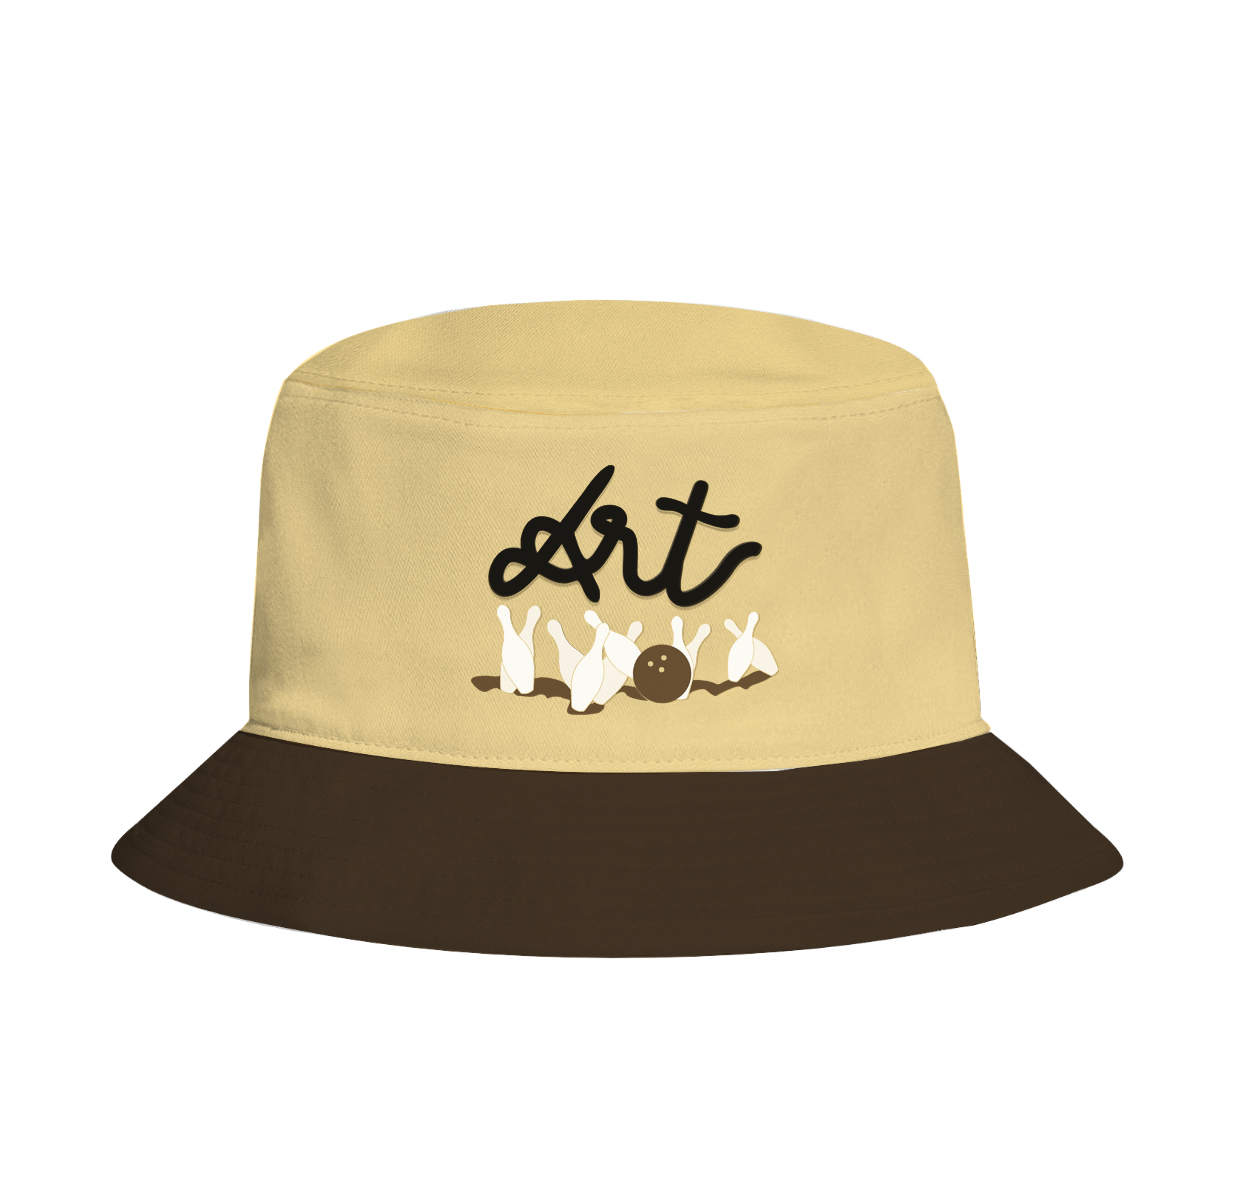 The Dude's bowling Hat - Medina Sod | Lebowski Bucket/Fisherman Hat